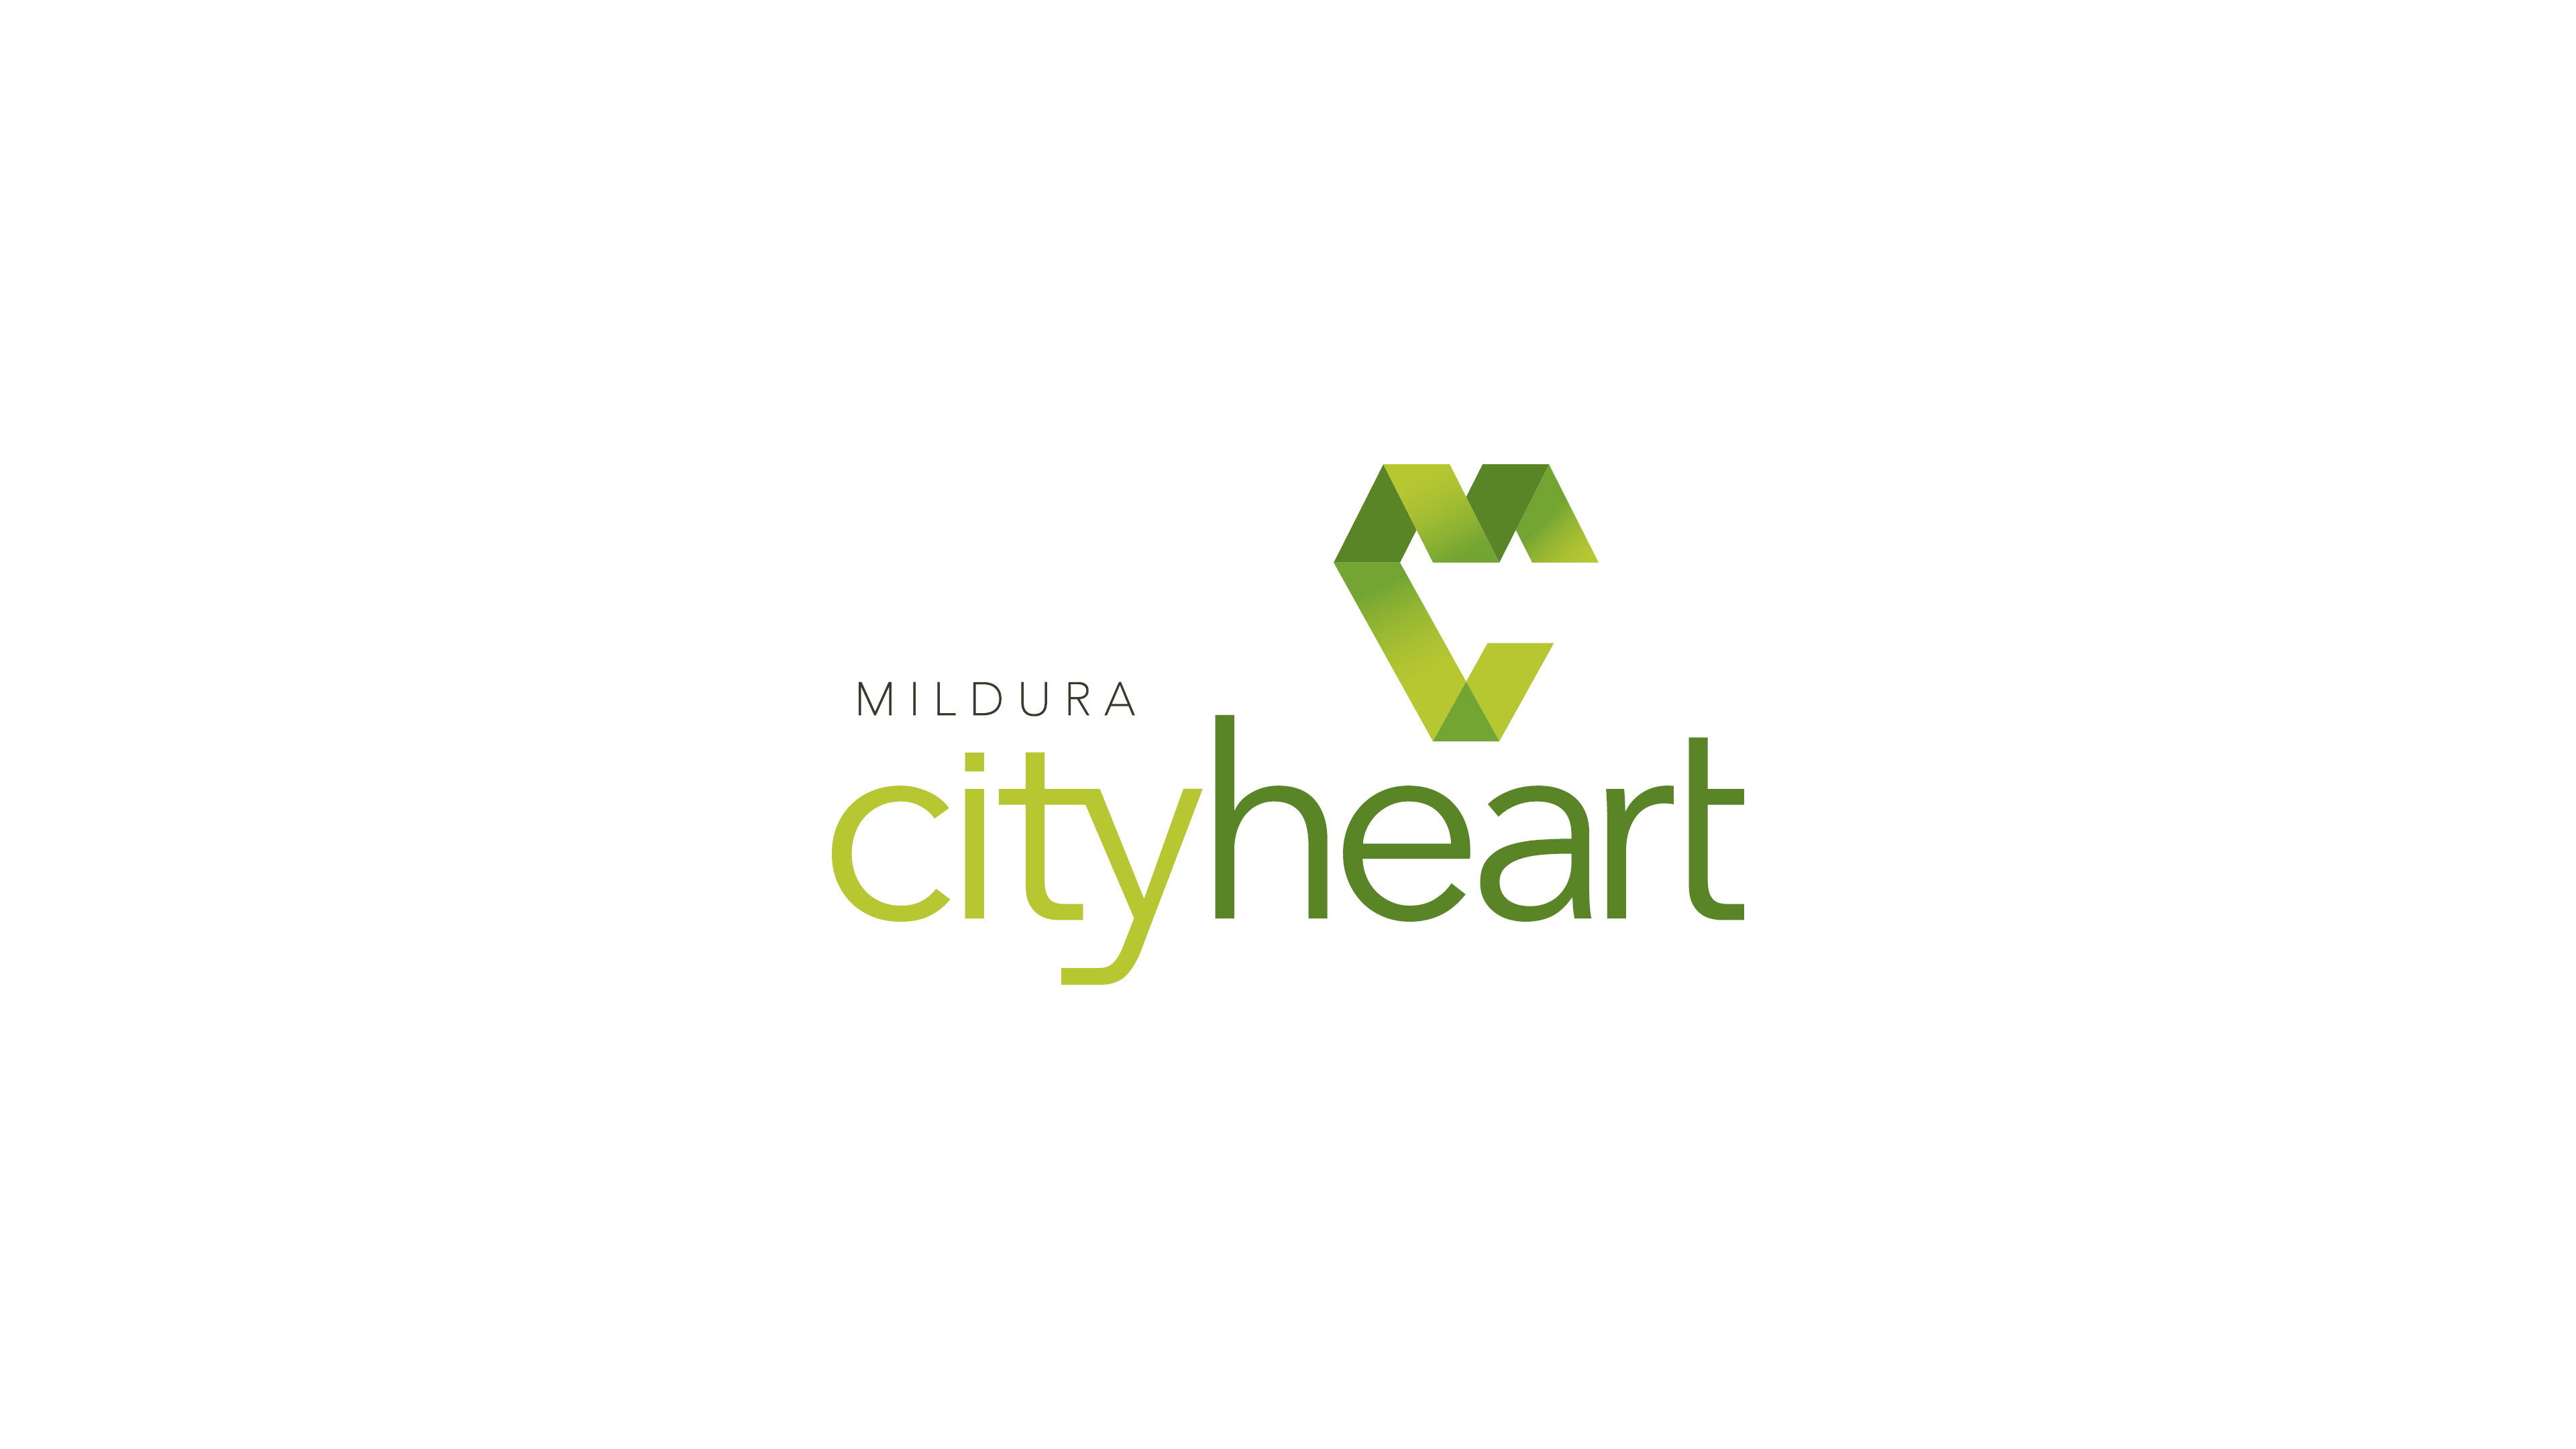 Mildura City Heart Logo and Branding Design - Saunders Design Group